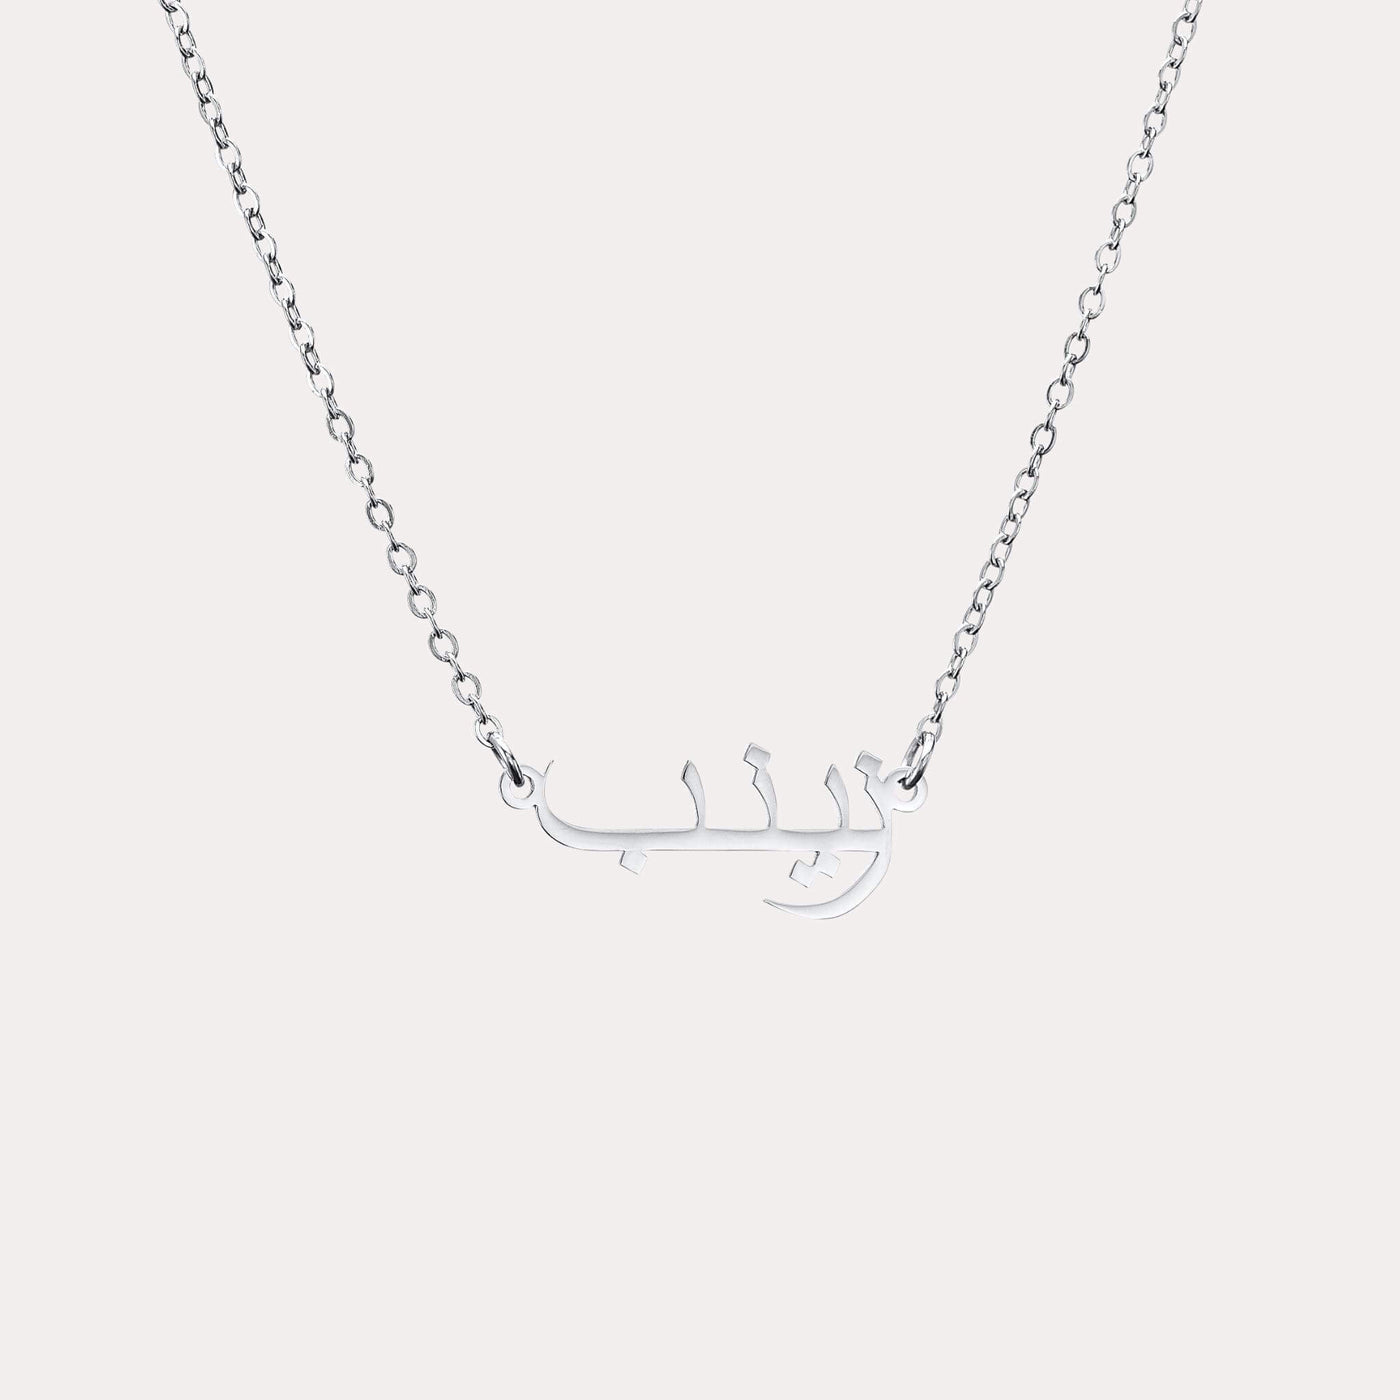 ZUDO-Personalized-Name-Necklace-silver